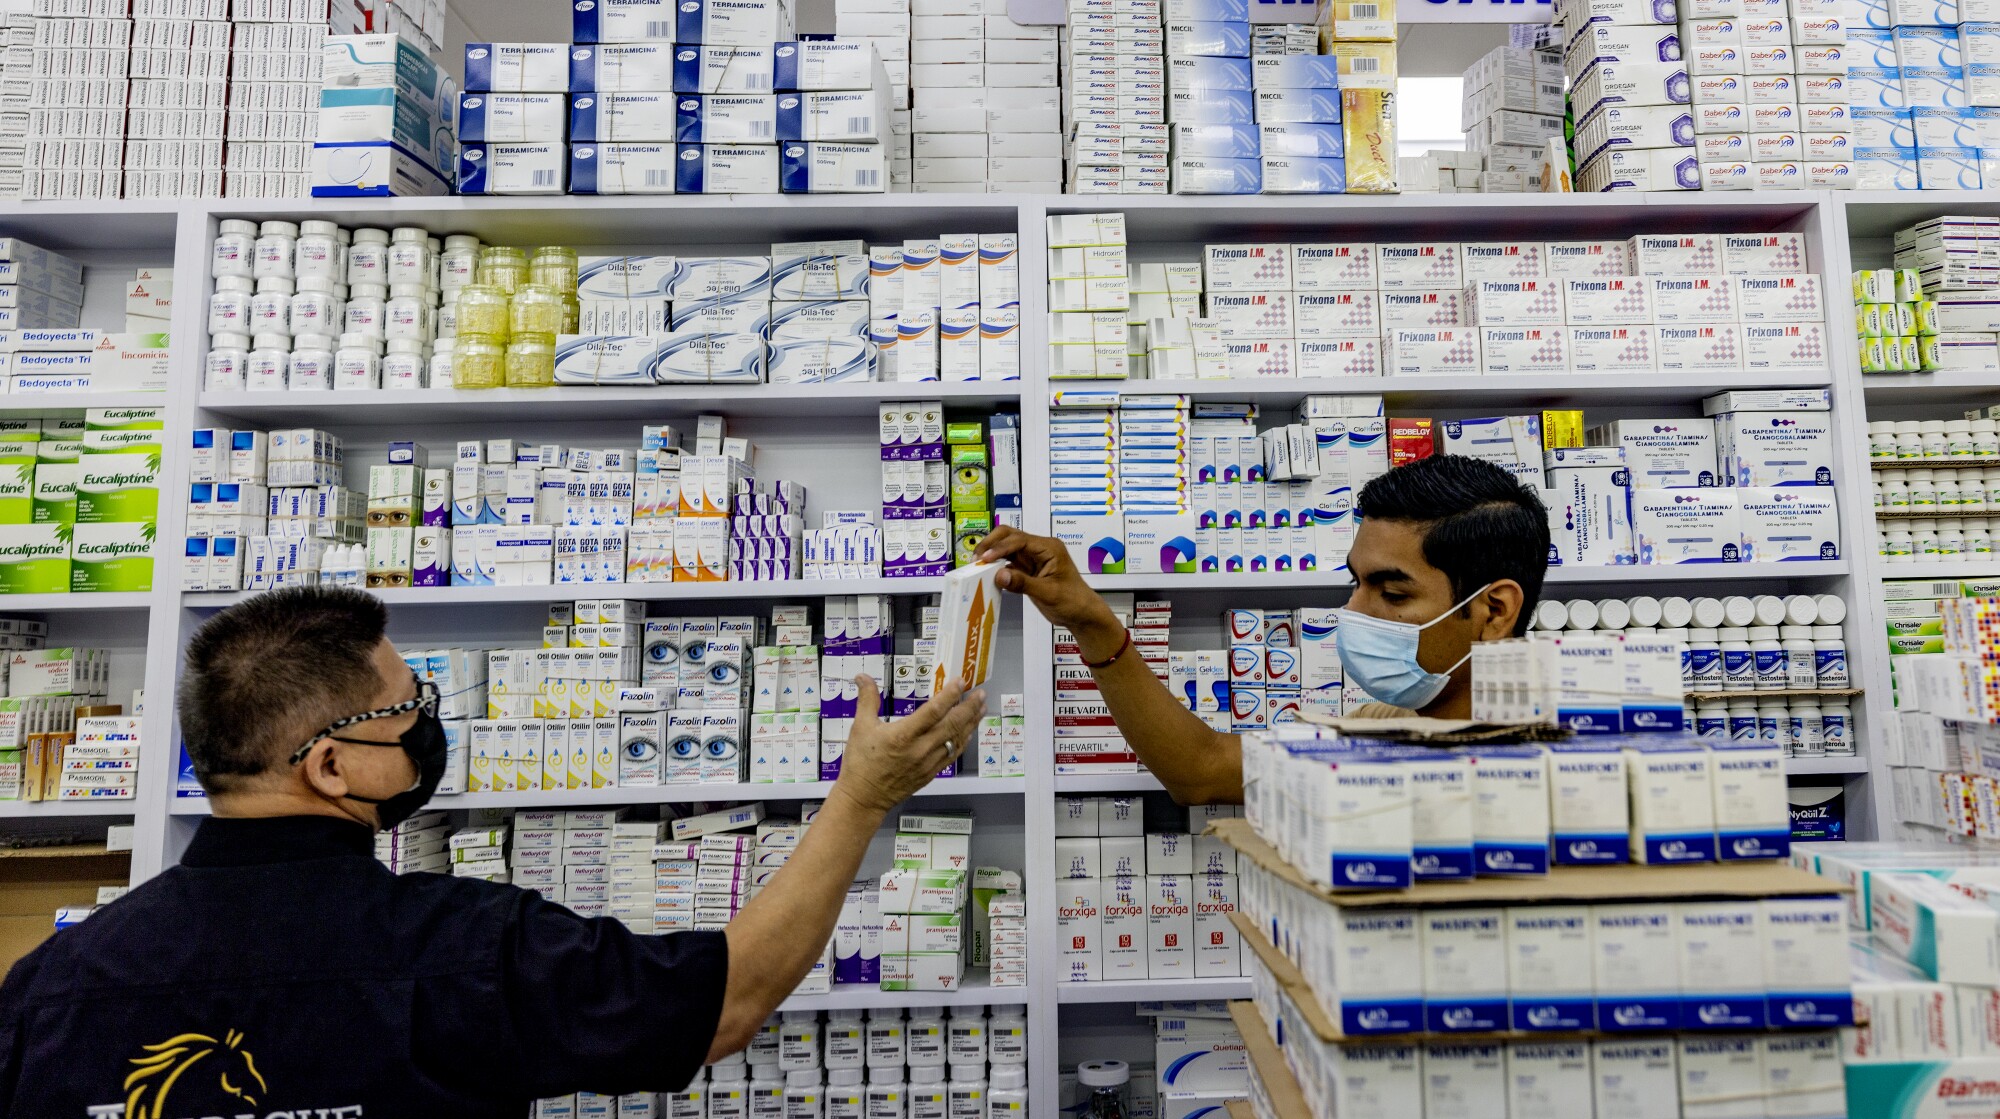  Workers retrieve abortion medication at a pharmacy in Nuevo Progreso, Mexico.